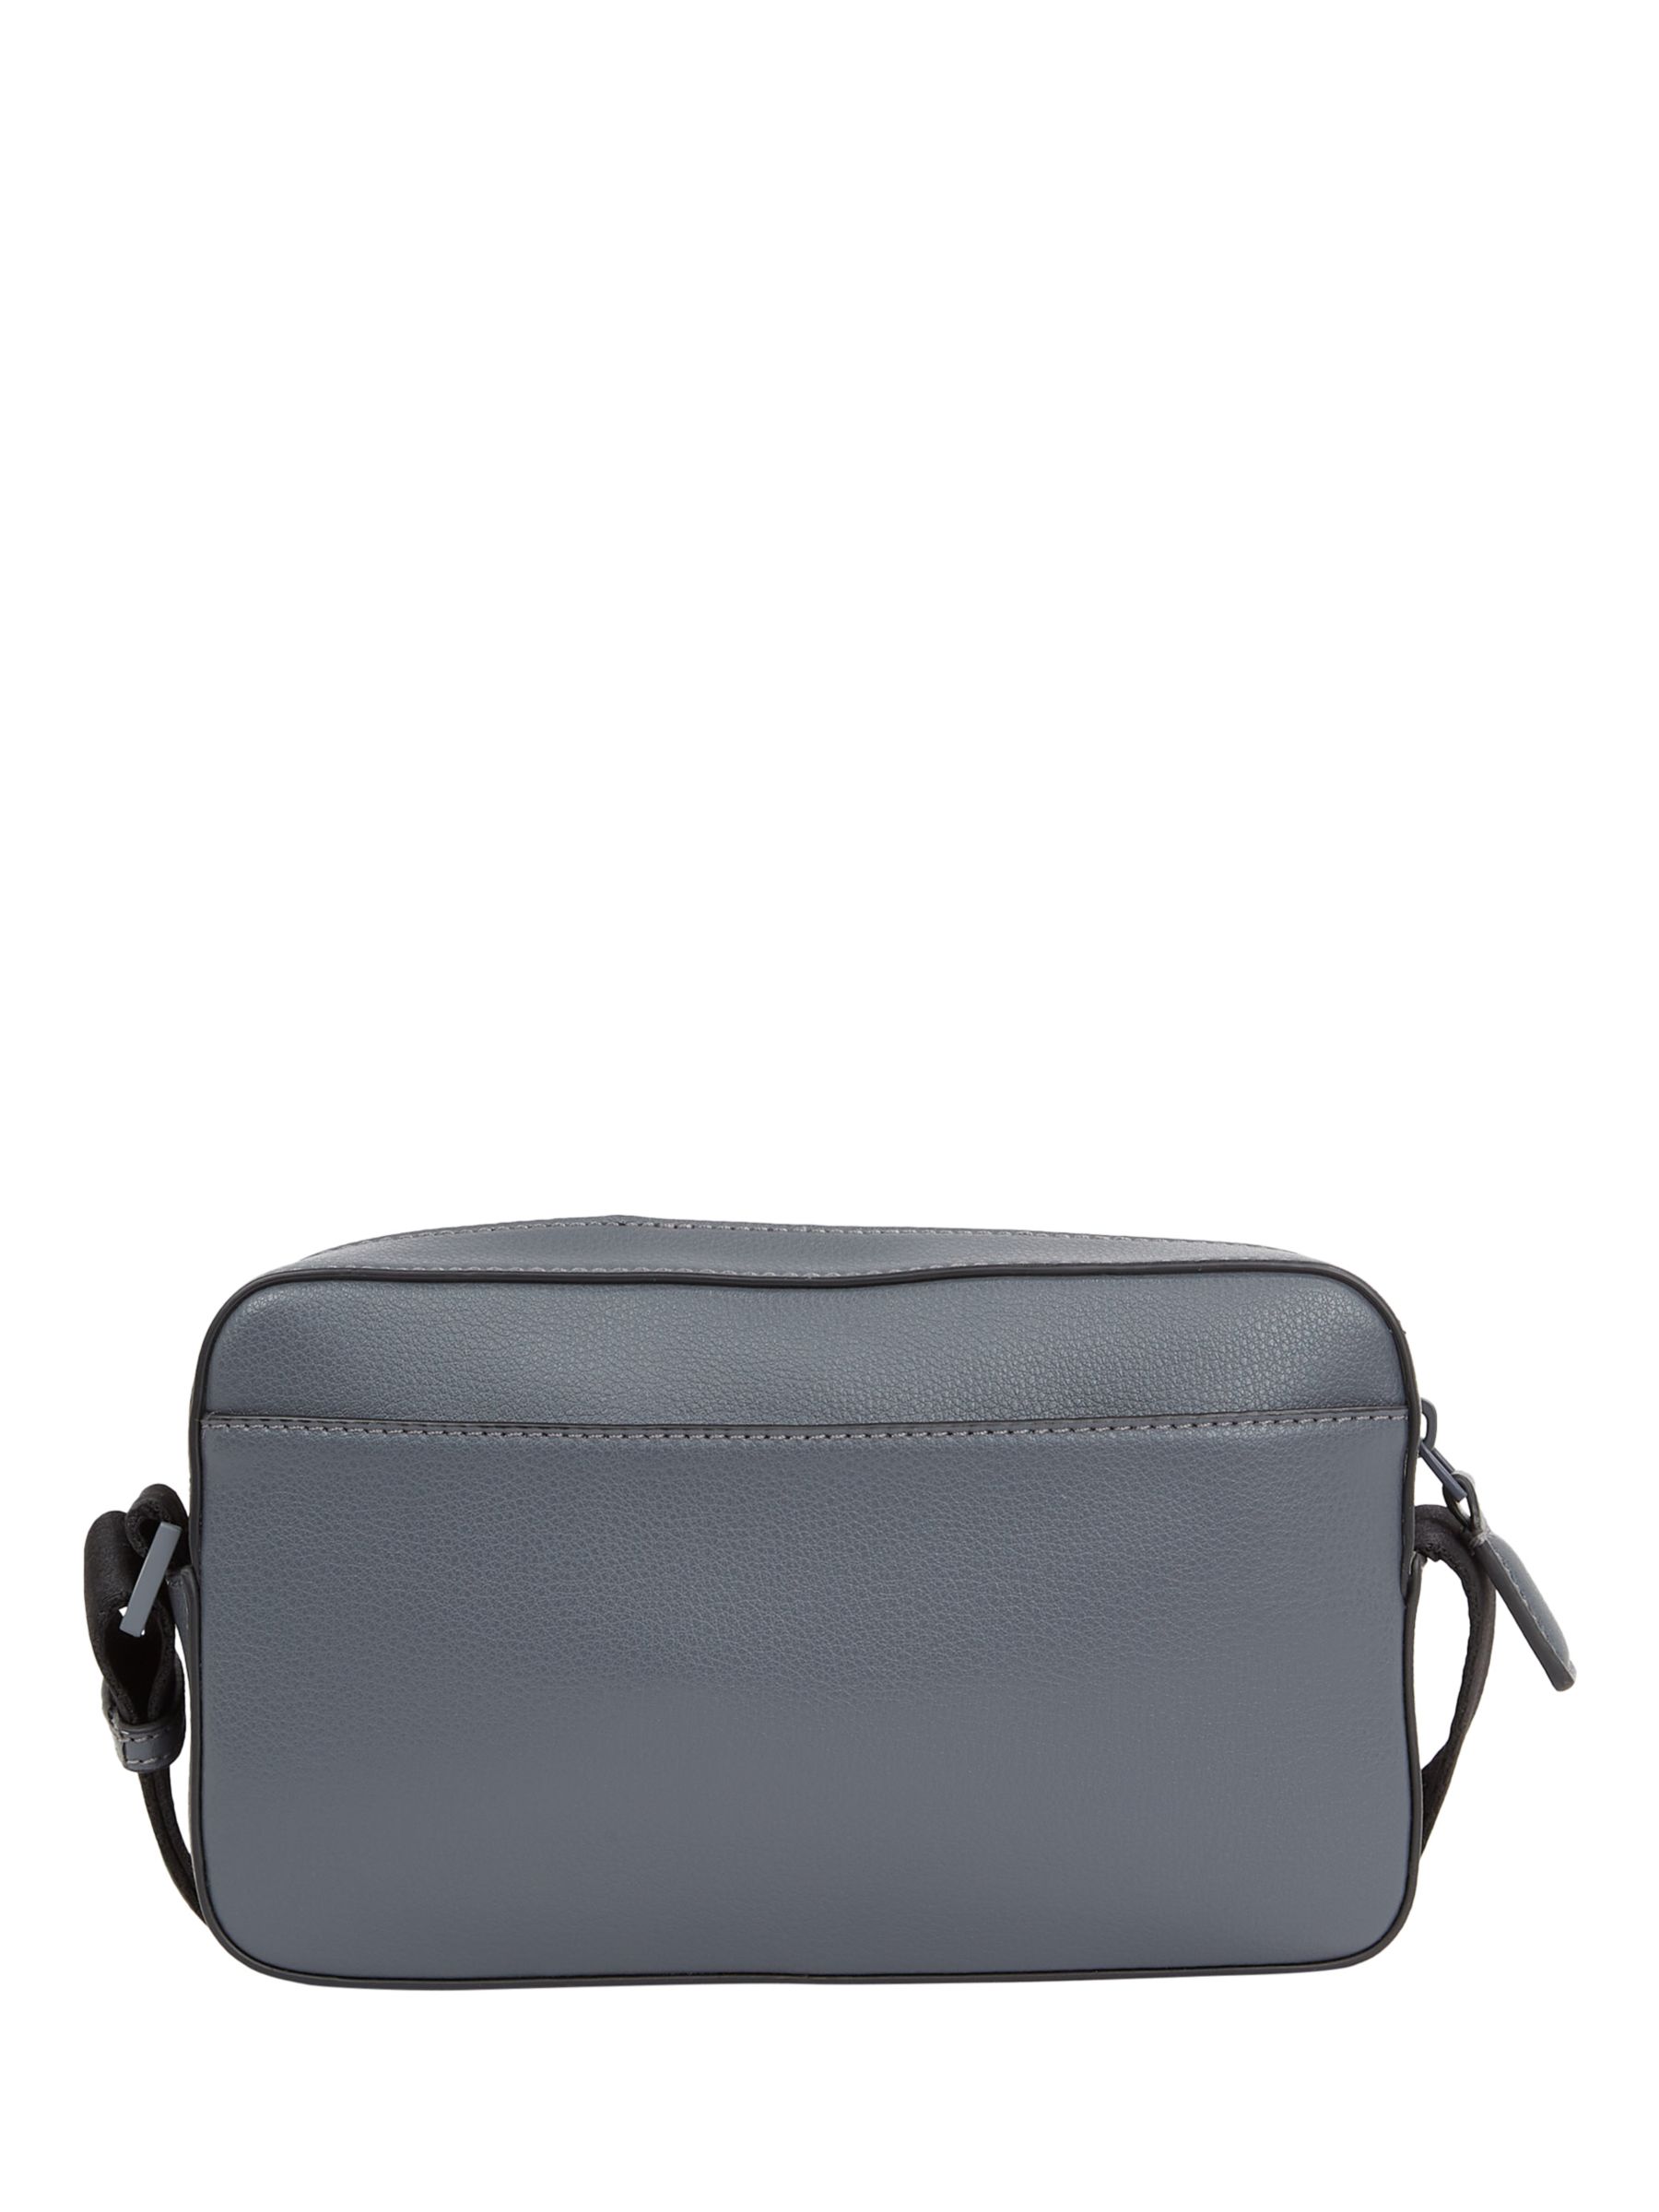 Calvin Klein Camera Crossover Bag, Grey, One Size